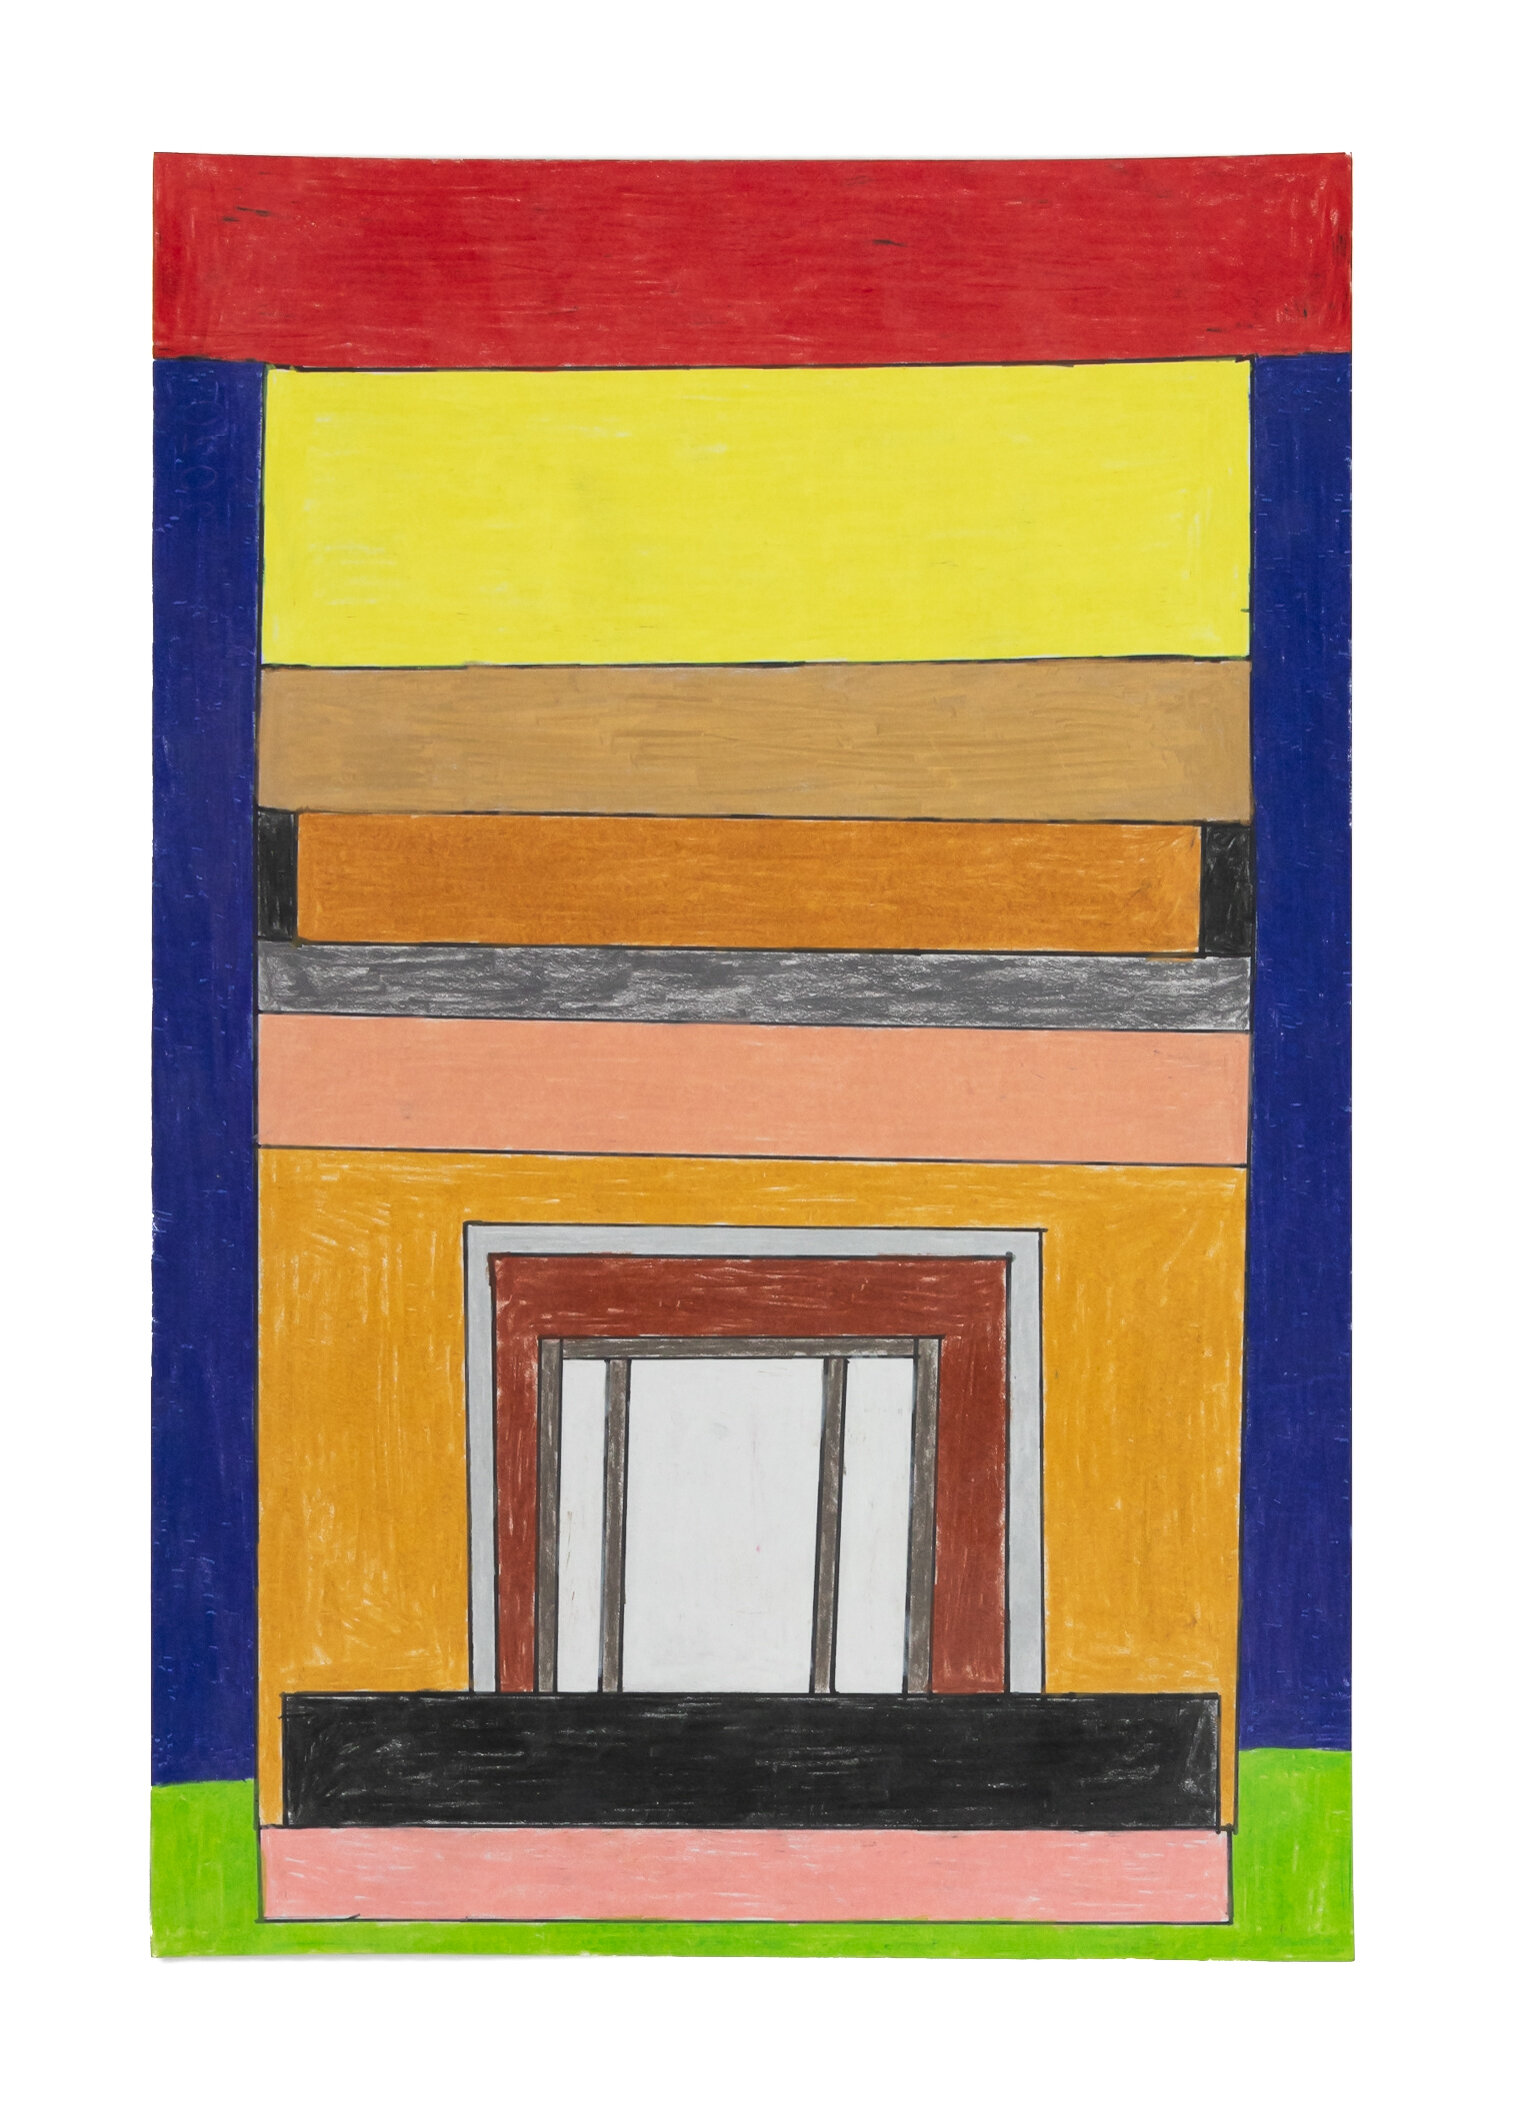 Dan Hamilton, Untitled (DH 68), 2020, 12x18 inches, colored pencil on paper